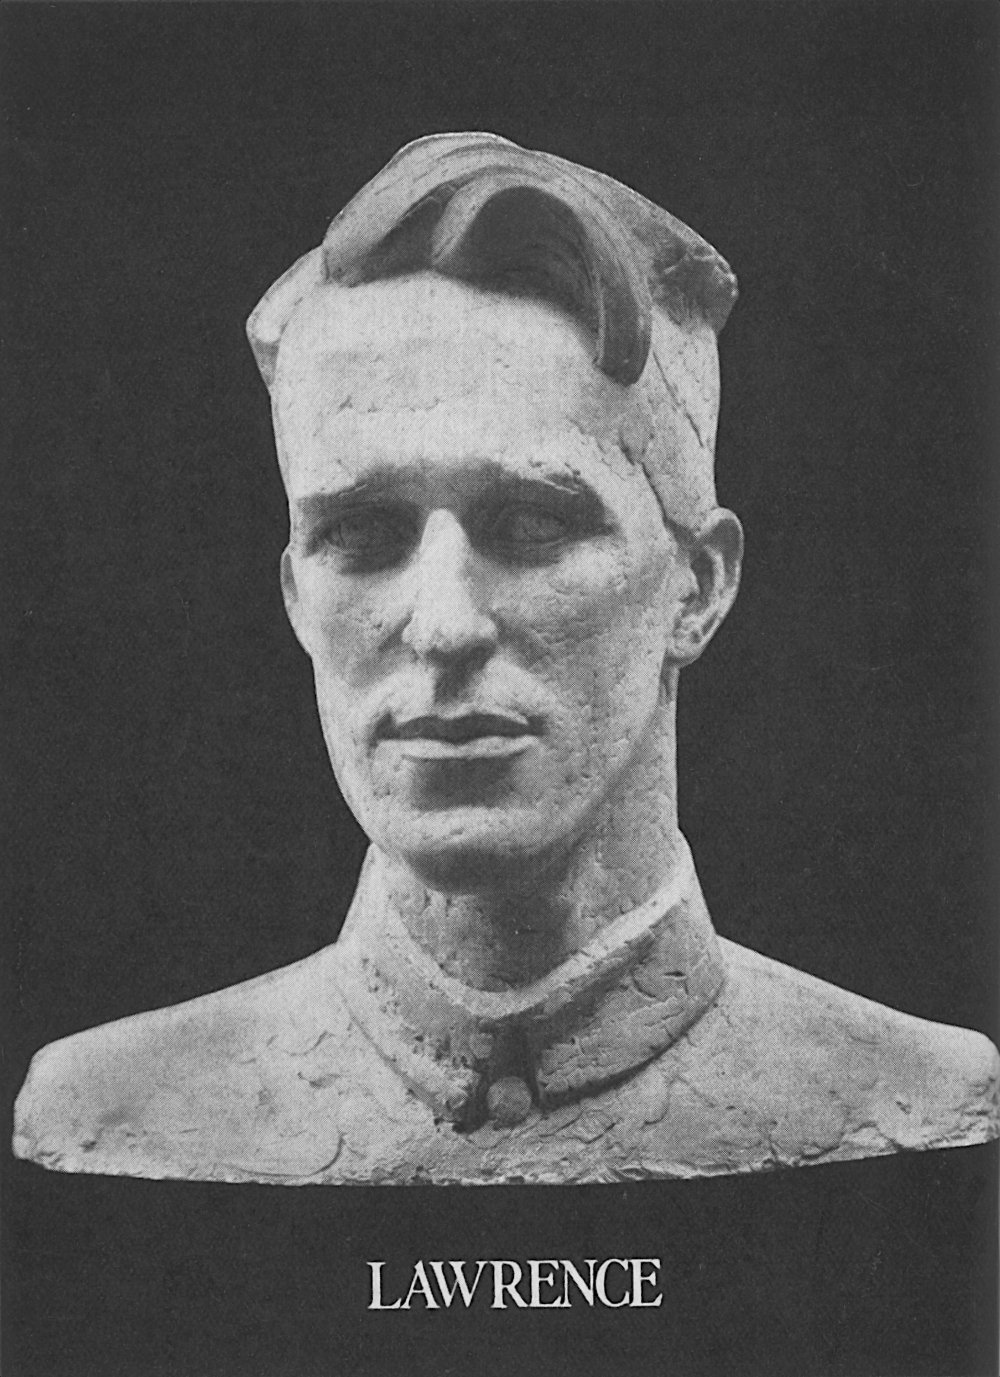 Photo portrait shot of Lawrence bust statue